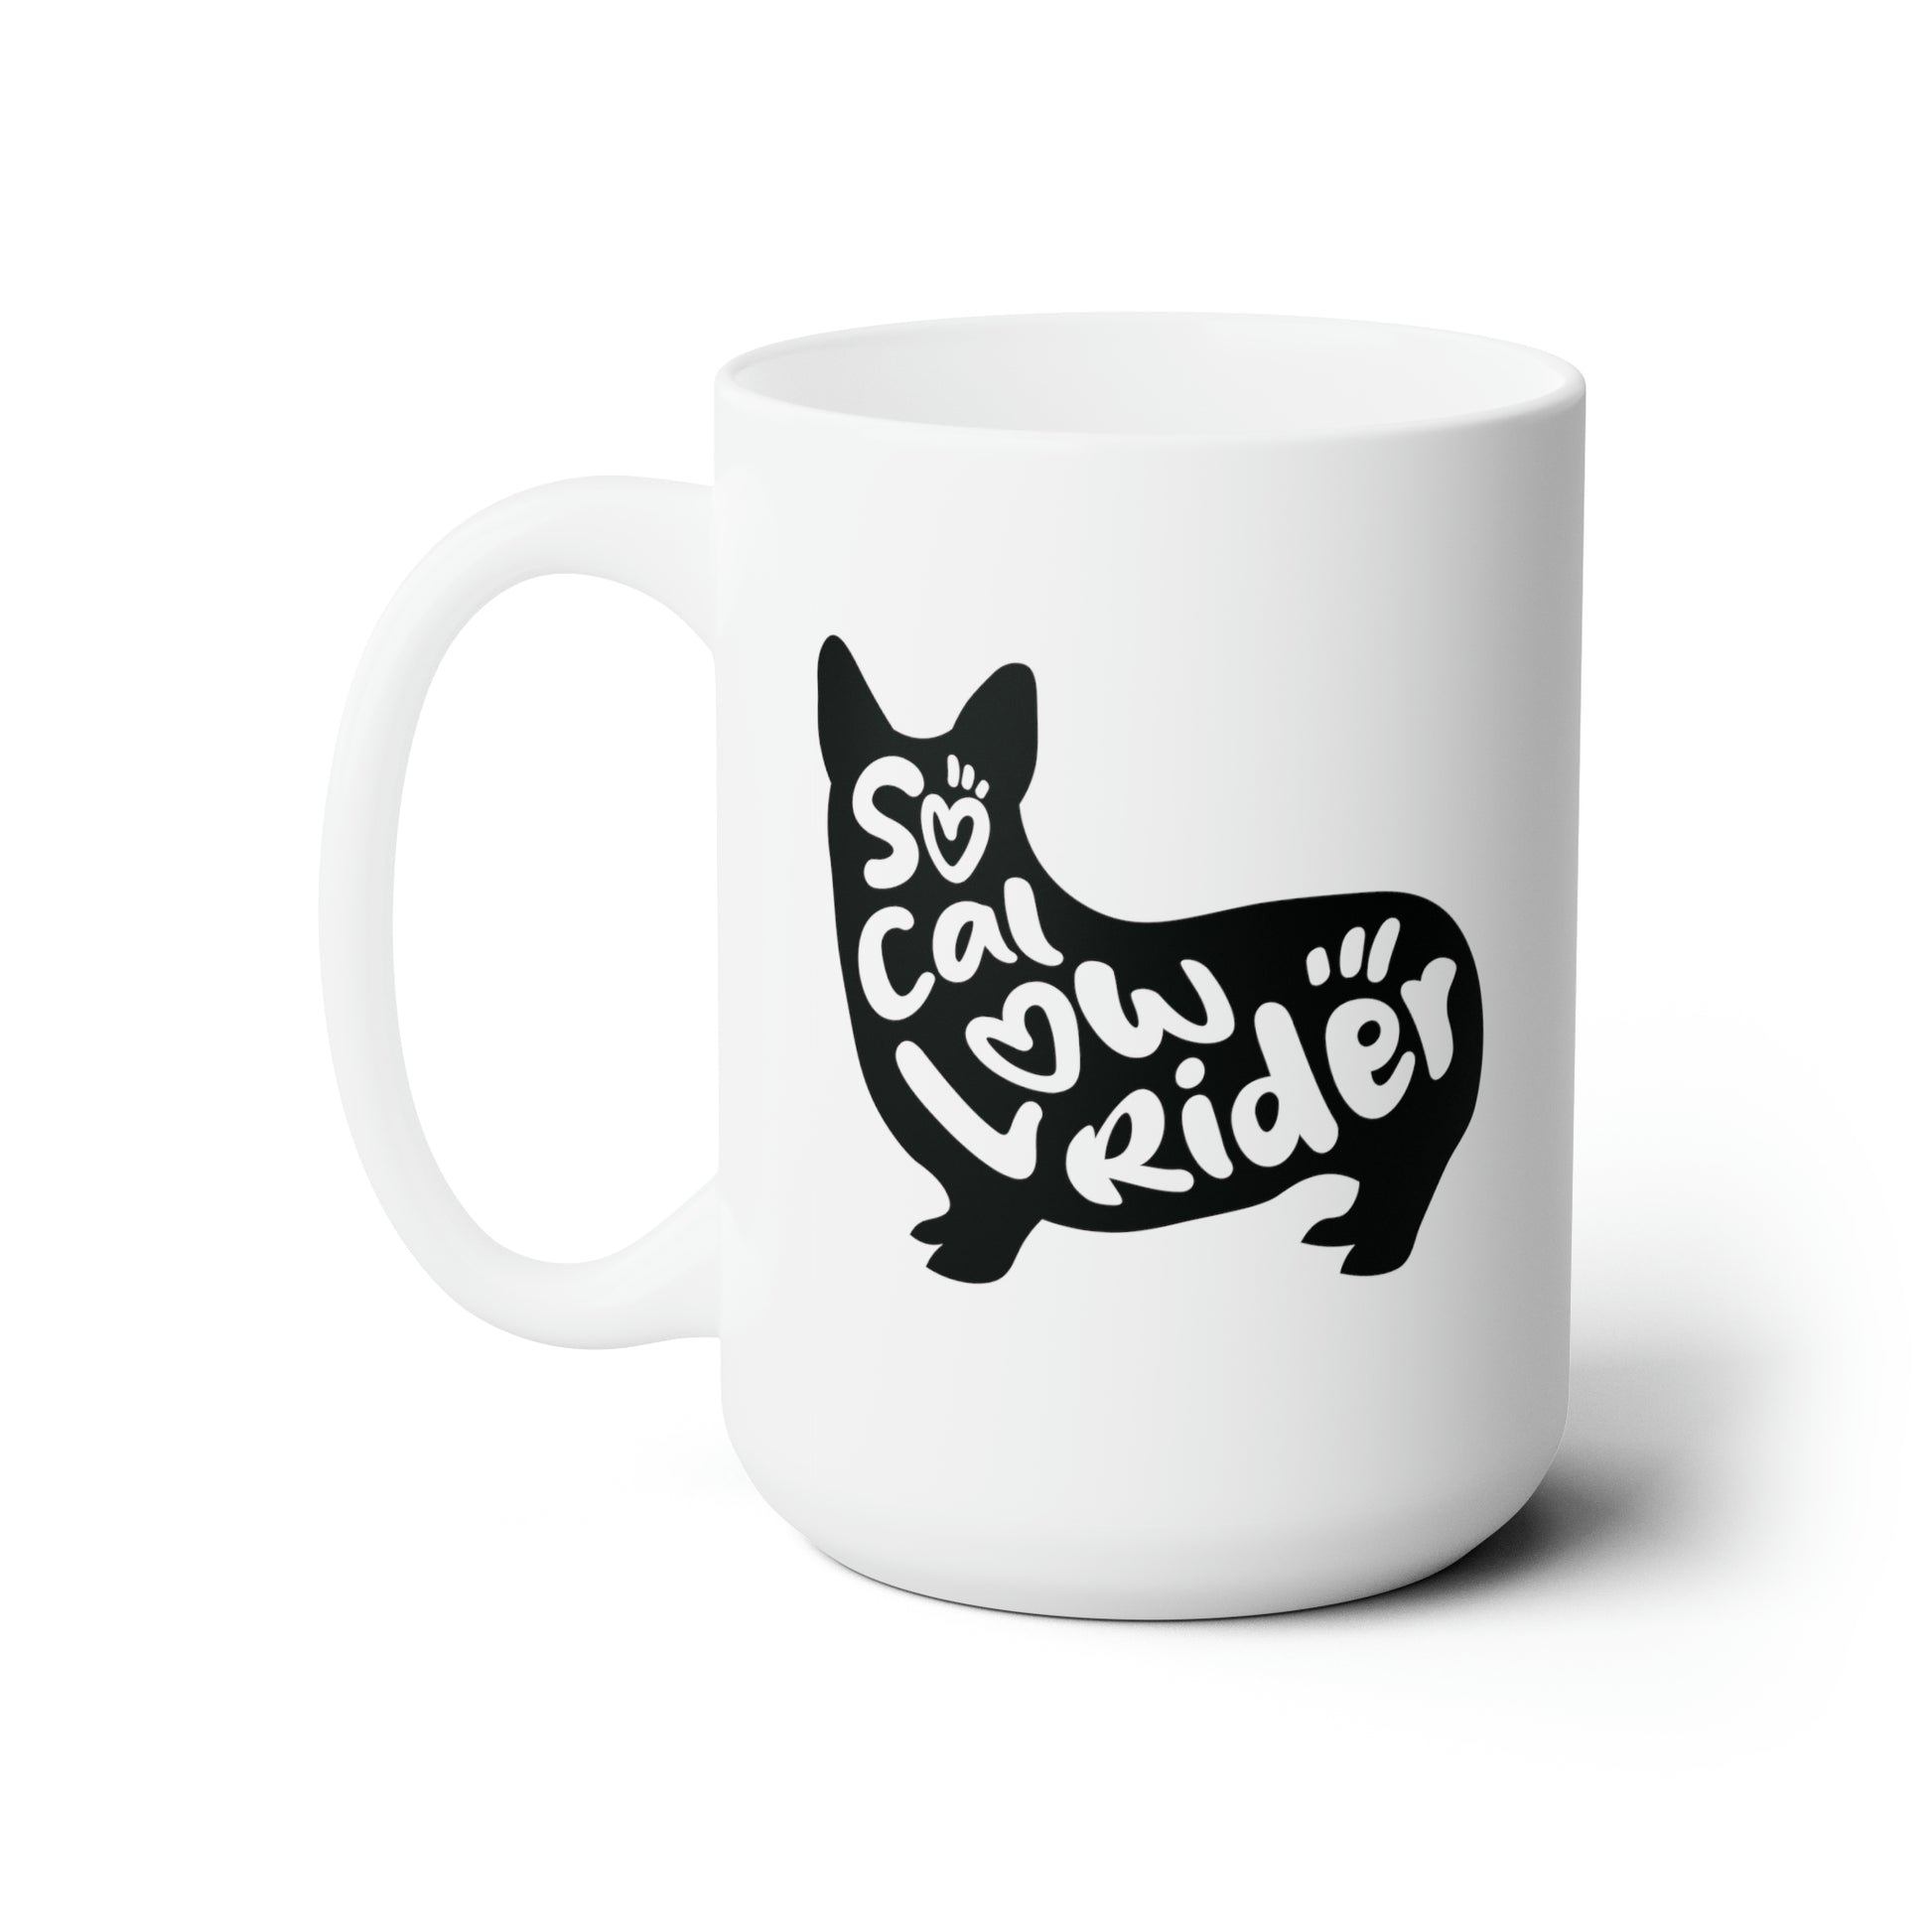 SoCal LowRider Southern California corgi dog coffee mug ceramic cup